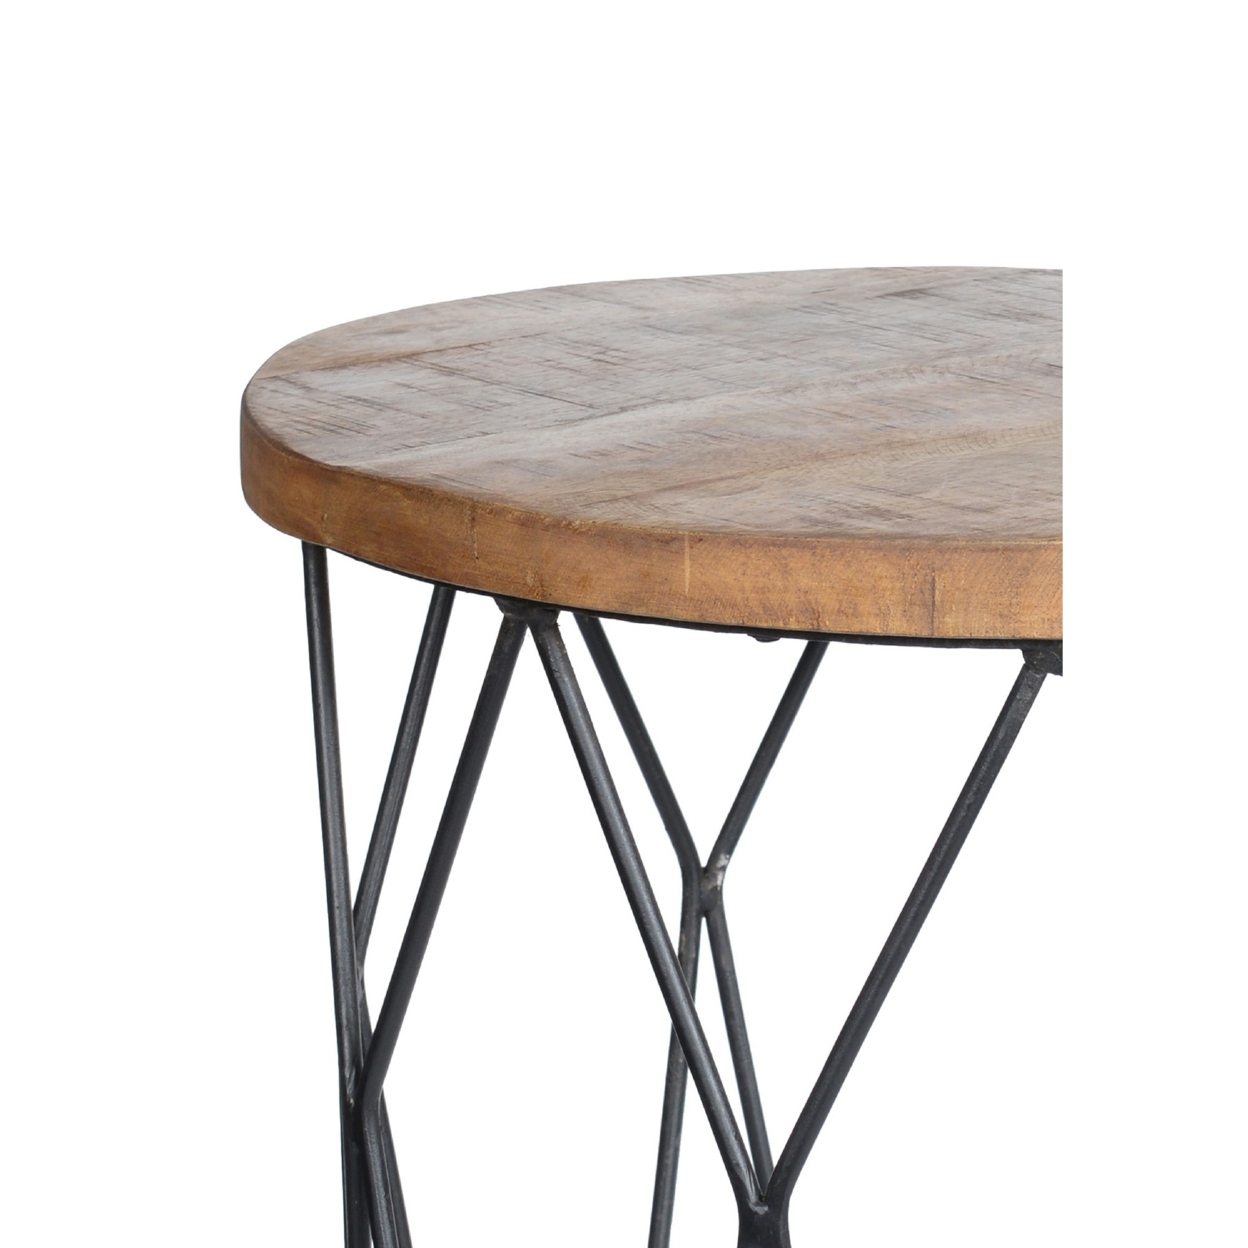 Round Mango Wood End Table With Iron Geometric Base, Black And Brown- Saltoro Sherpi